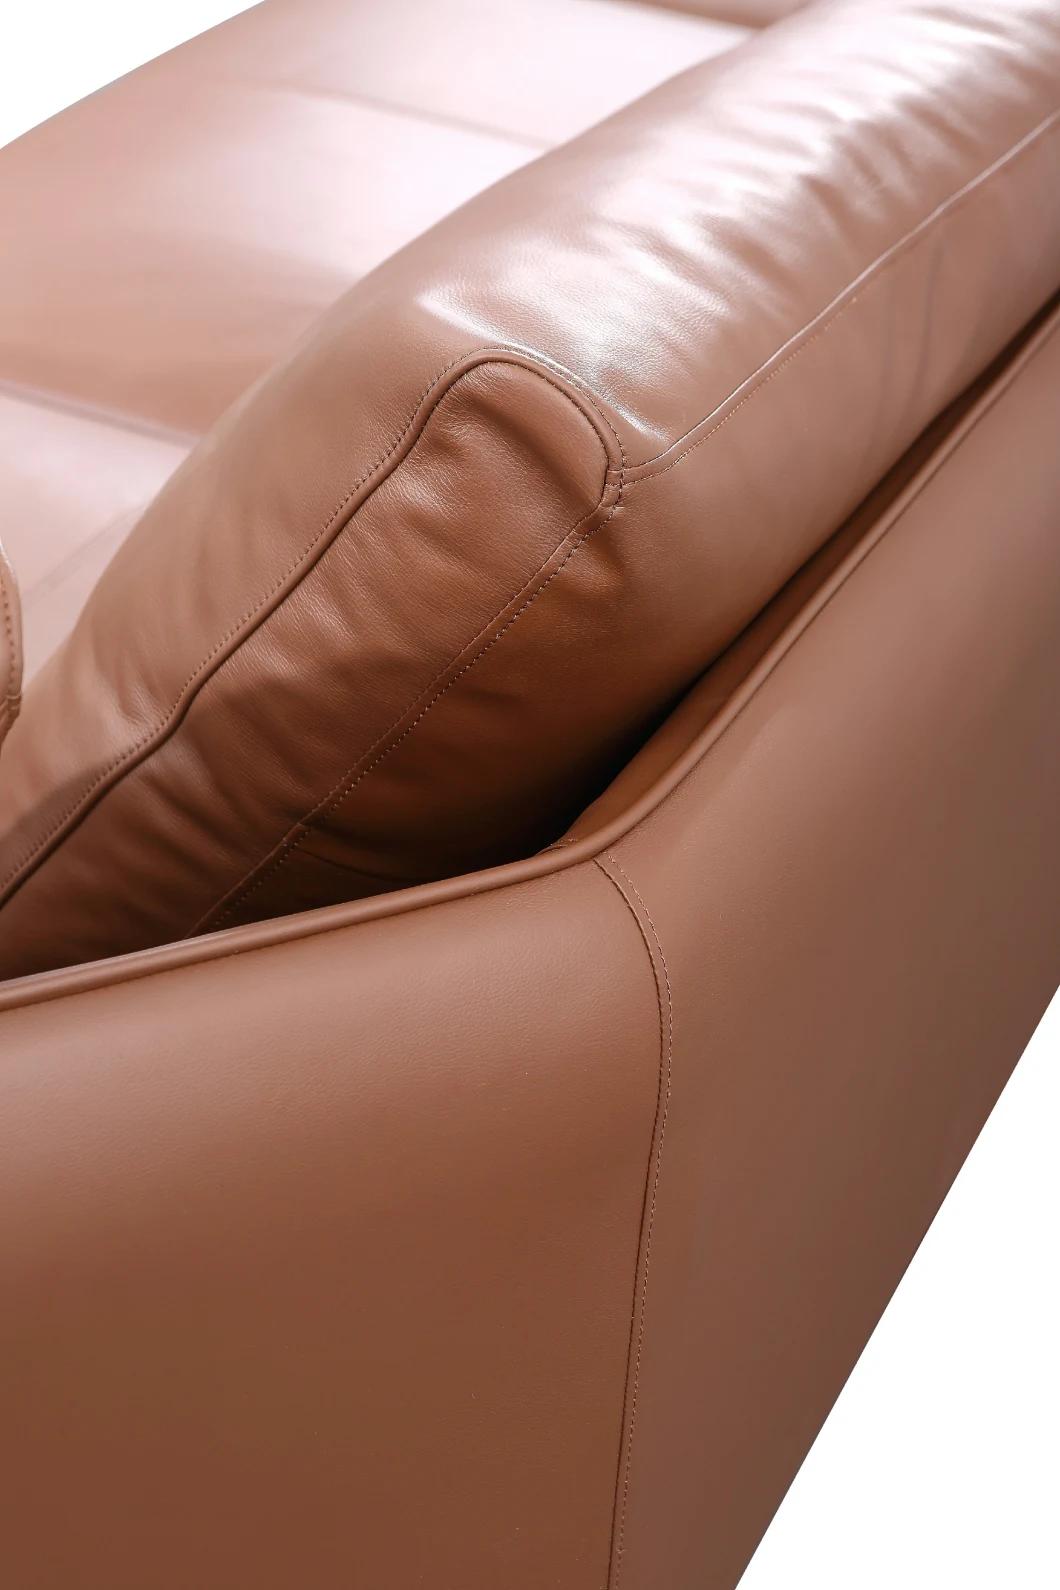 New Modern Home Furniture Multi-Functional Sectional Fabric Sofa Living Room Sofa